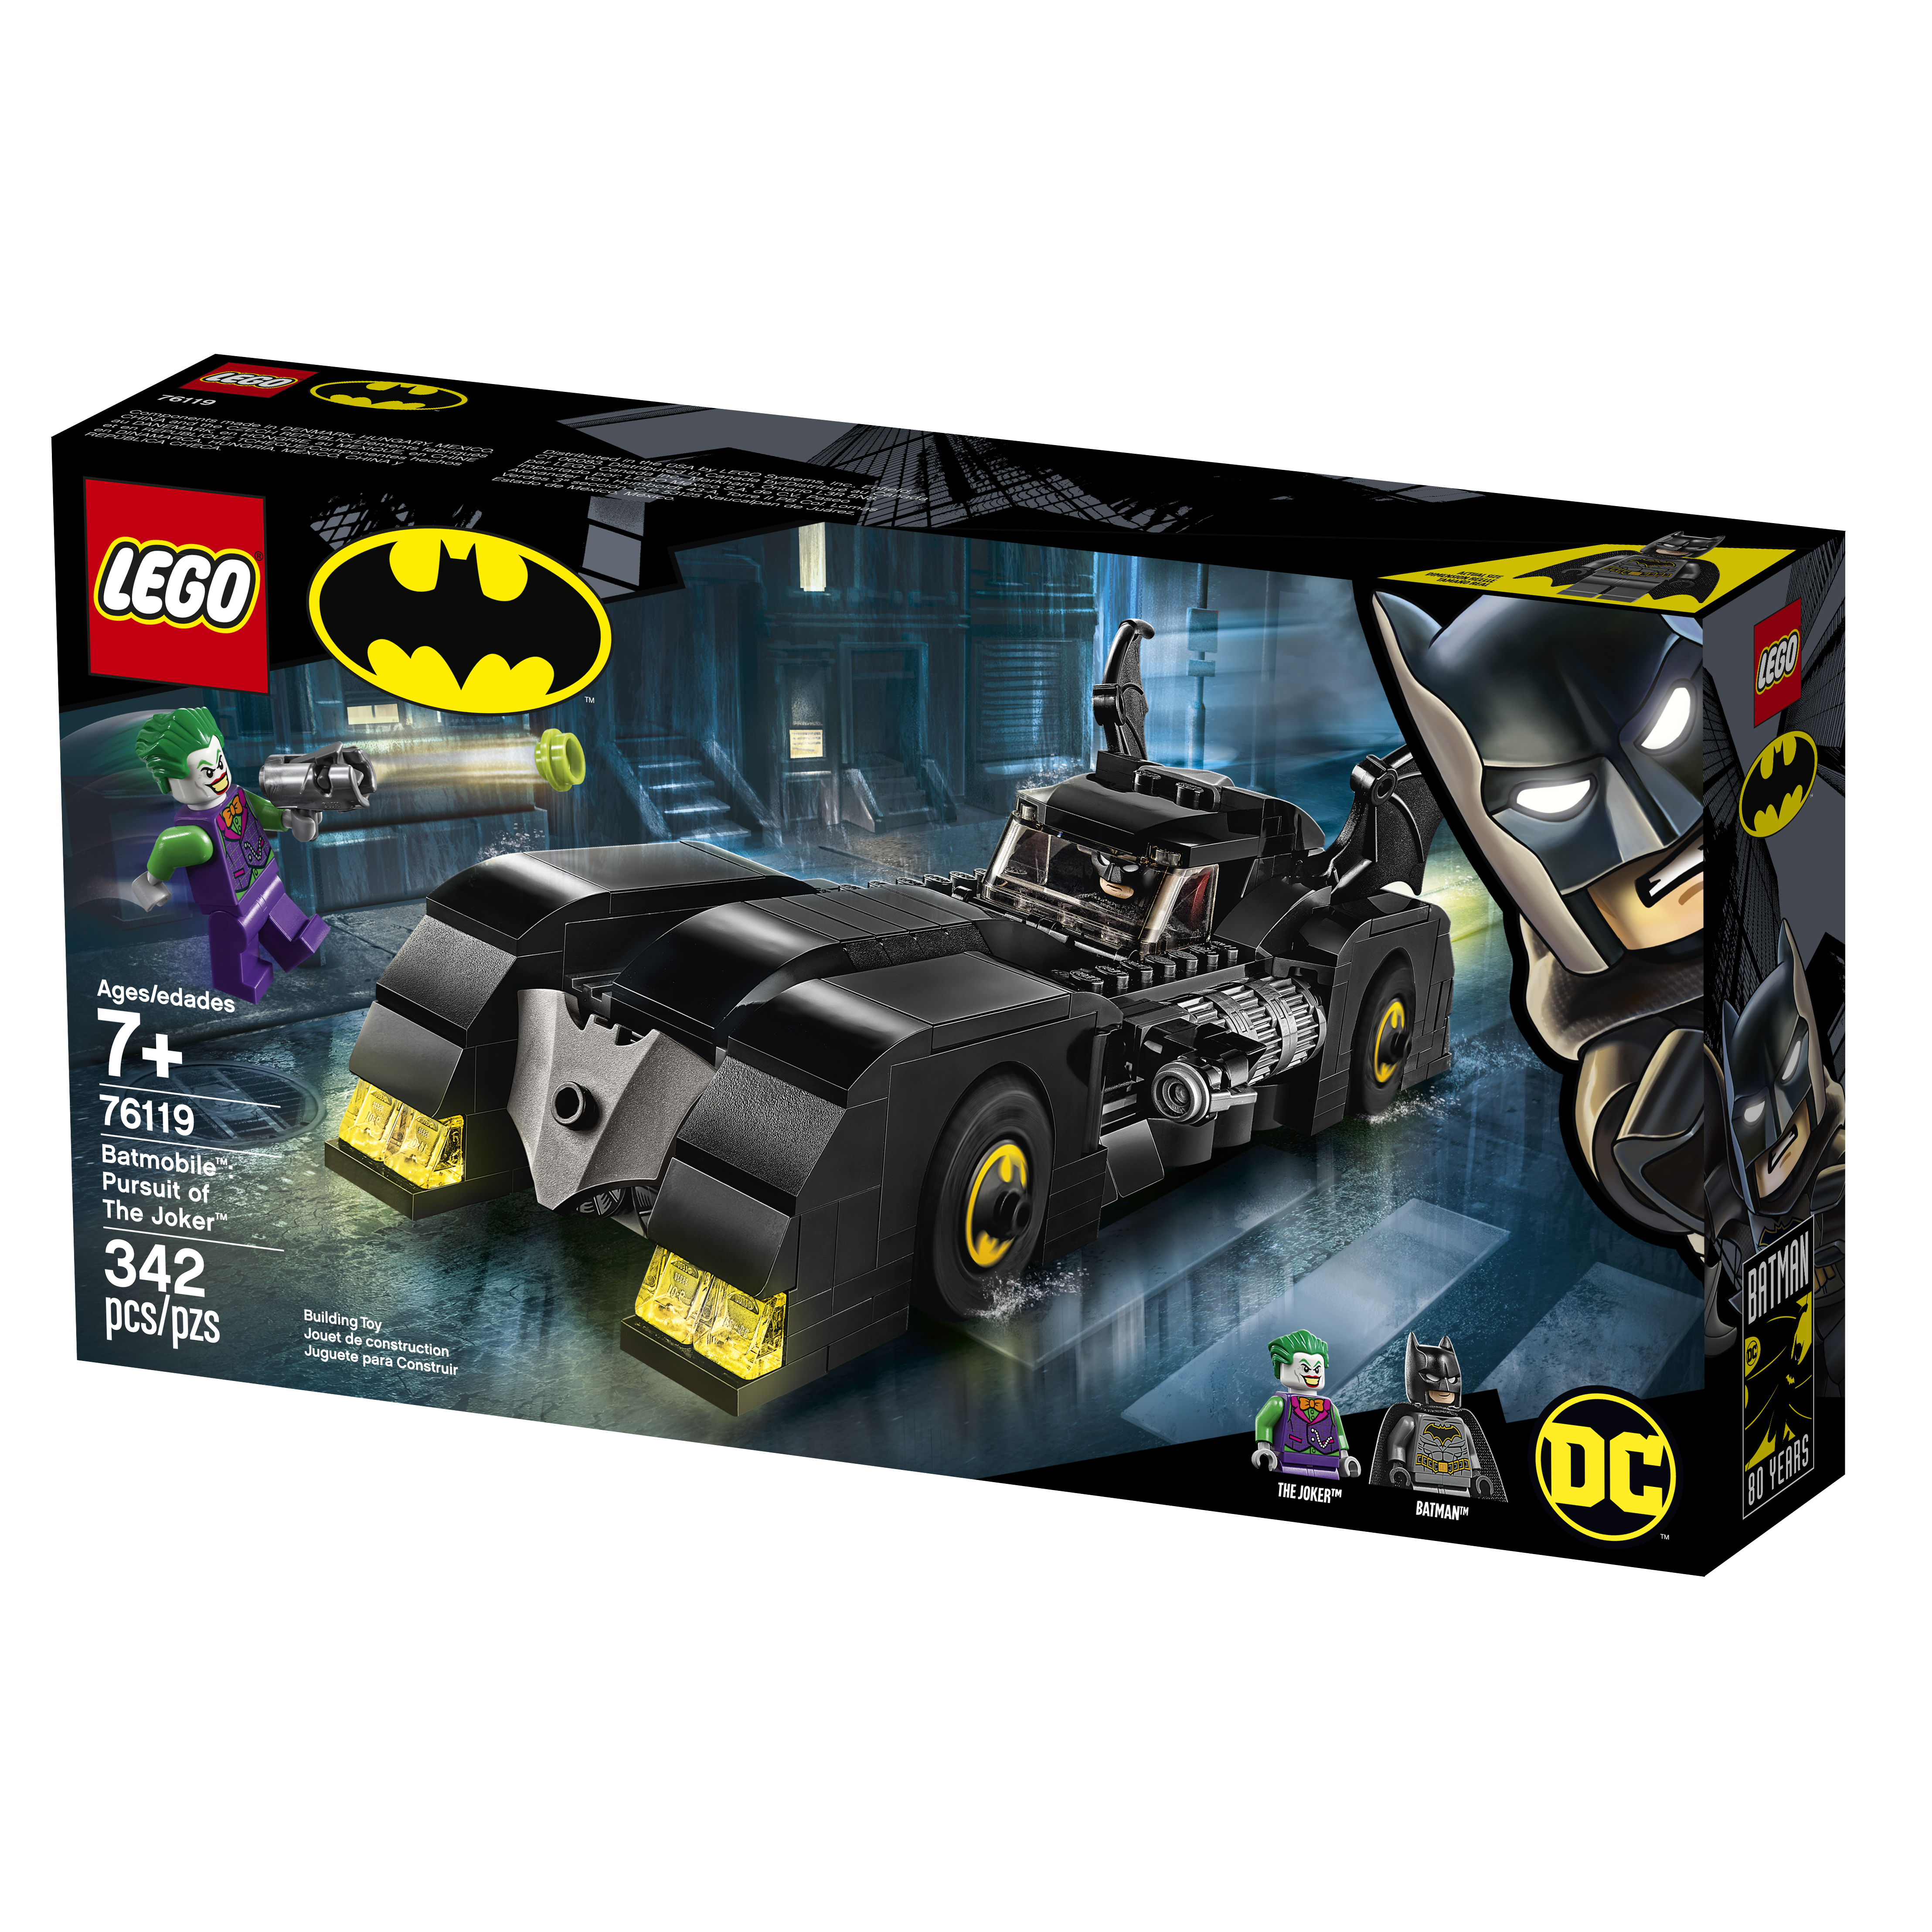 Six new LEGO Batman 80th Anniversary sets let you build your own Gotham City